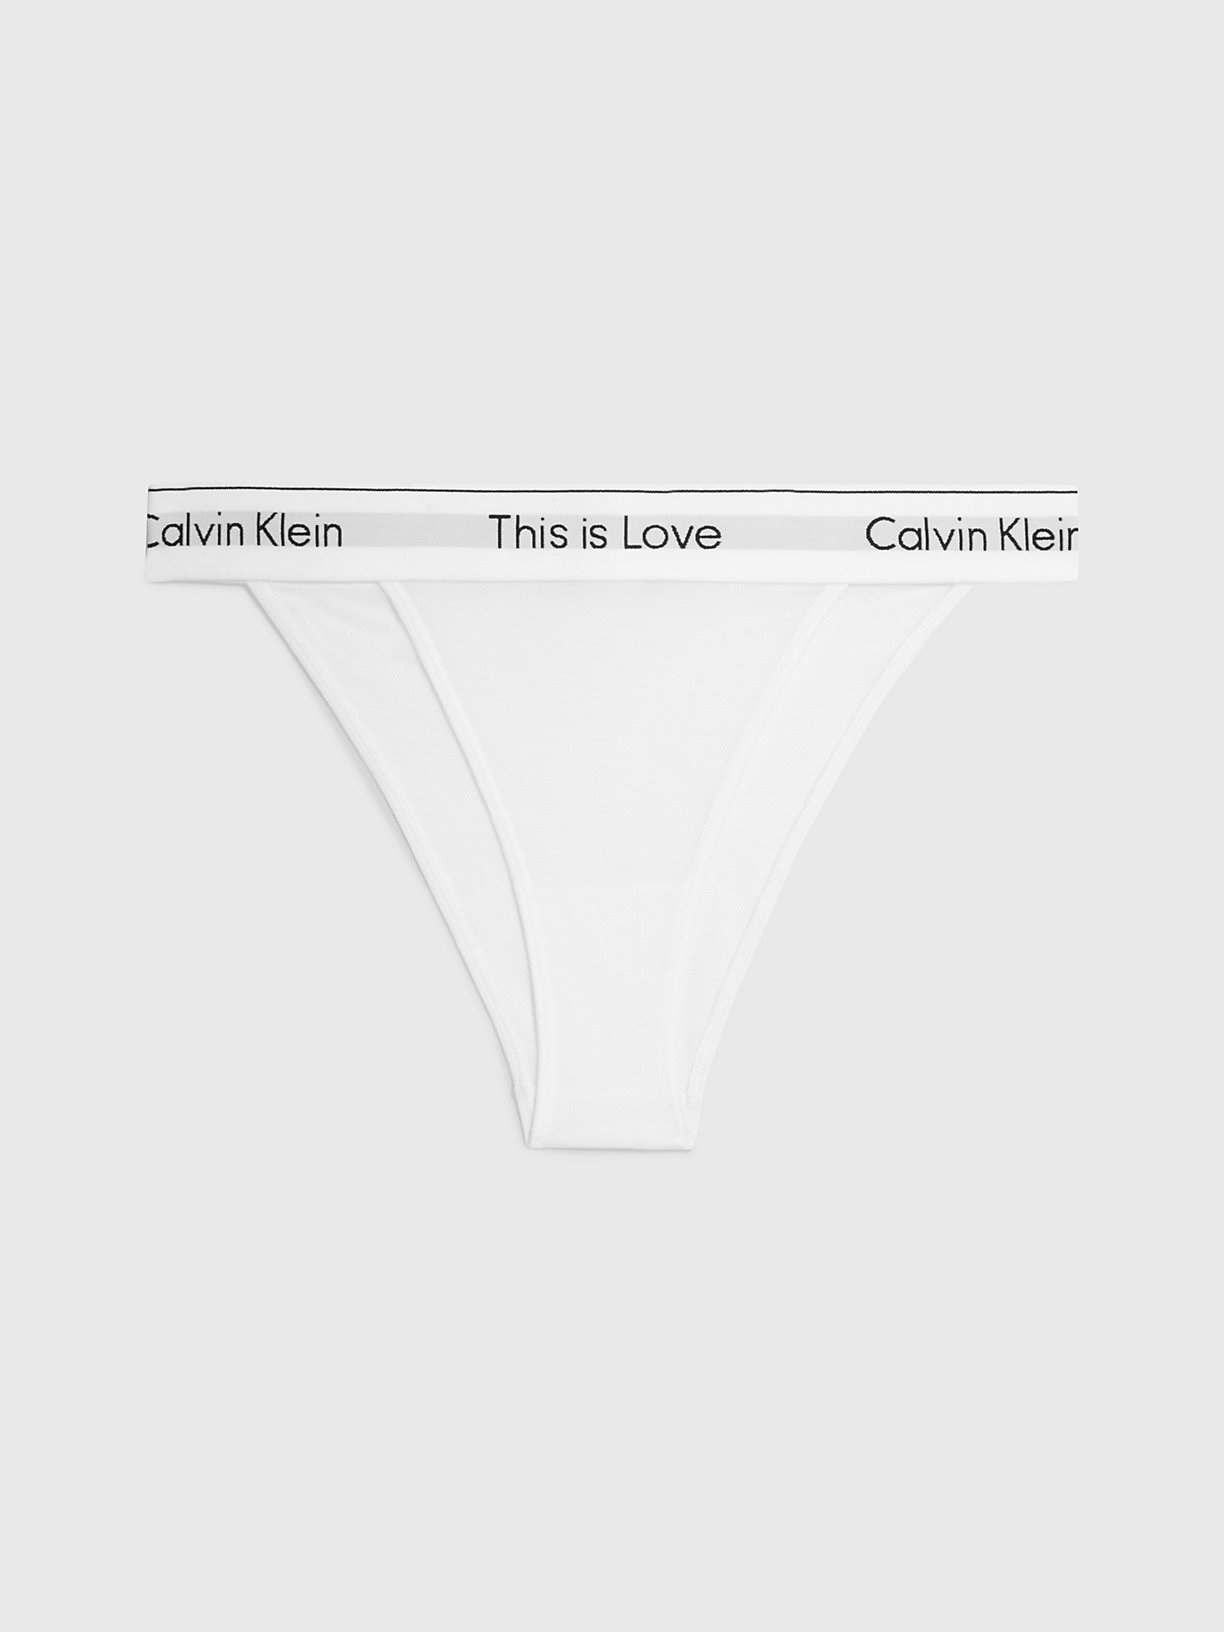 Kalhotky CALVIN KLEIN (QF7205E-01), Velikost M, Barva bílá